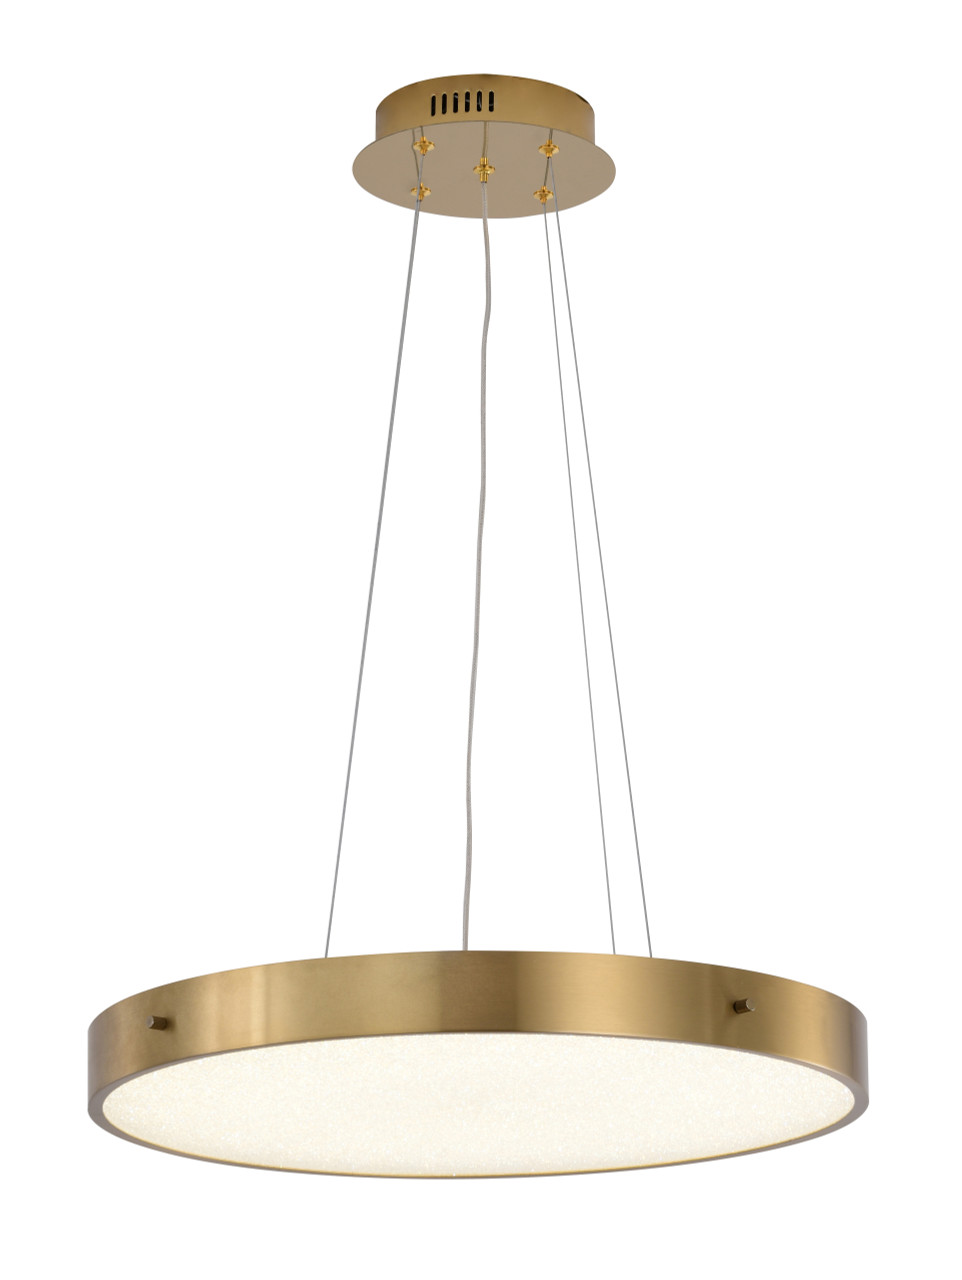 BETHEL INTERNATIONAL FT100C20BR 1-Light LED Chandelier, Brass